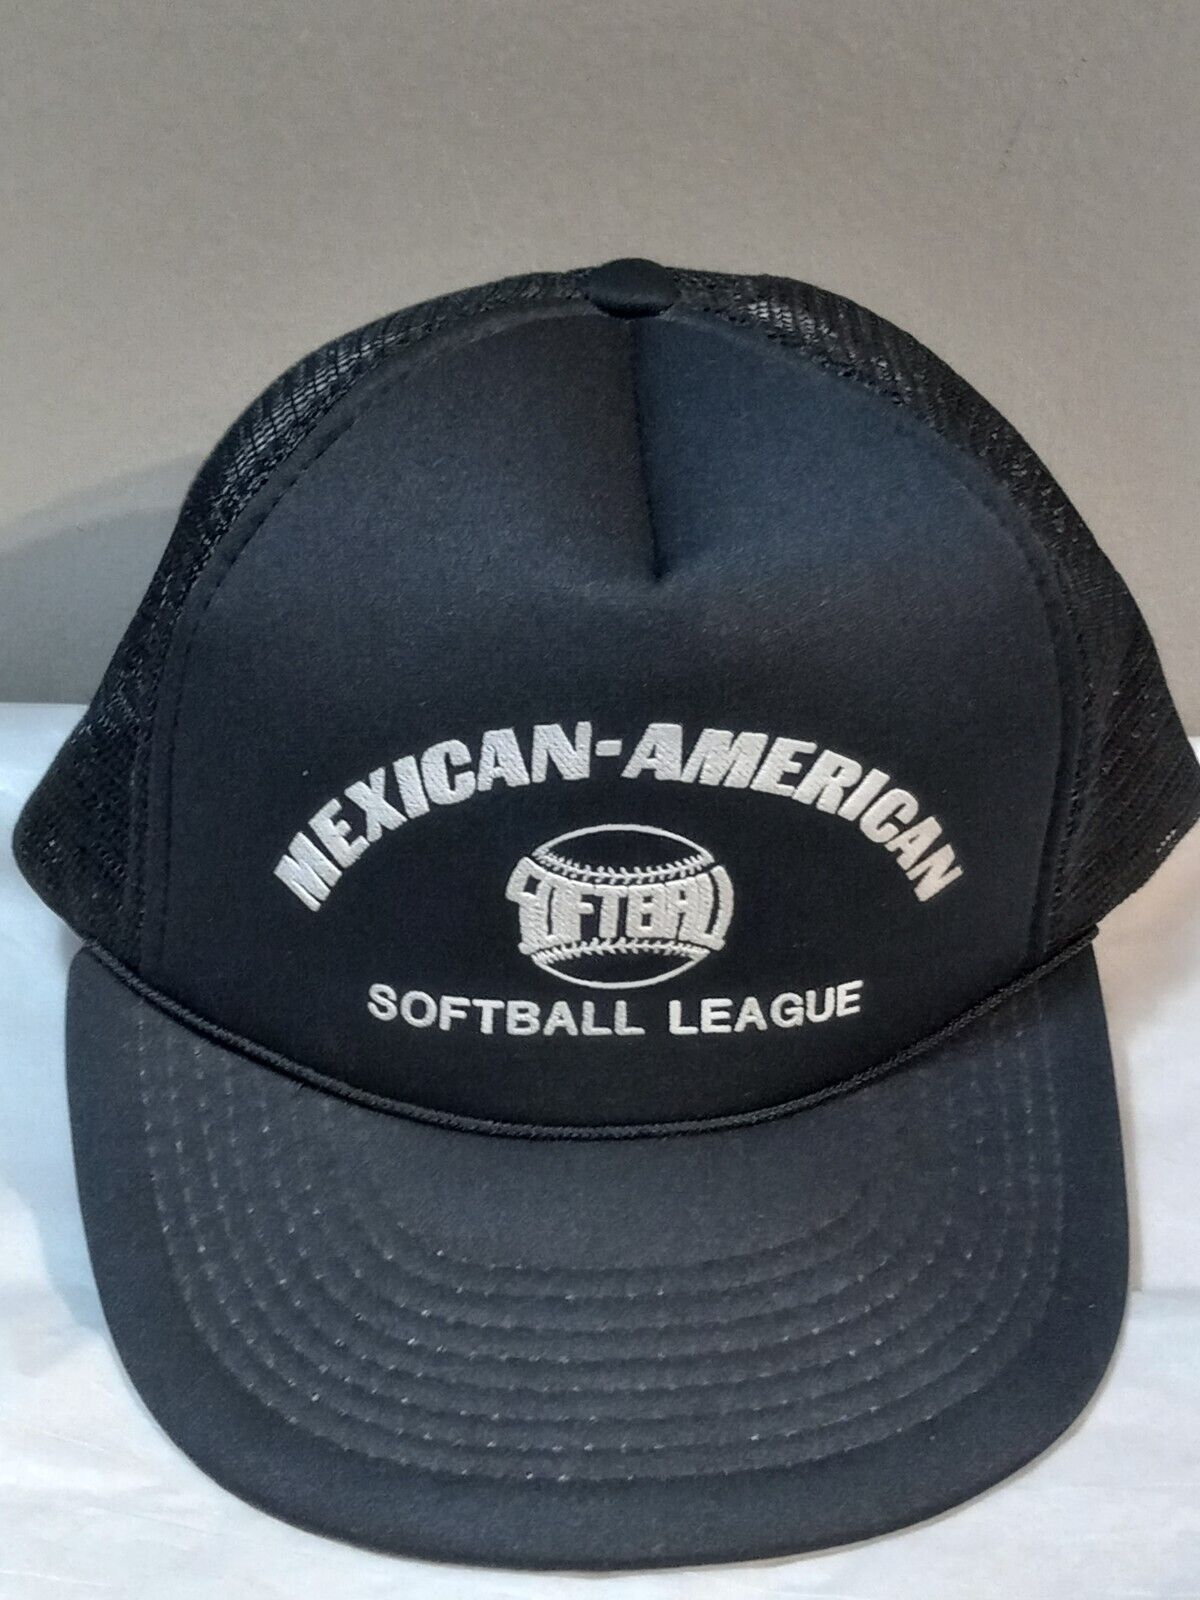 Vtg 80s 90 Mexican American Softball League Snapback Trucker Hat Black